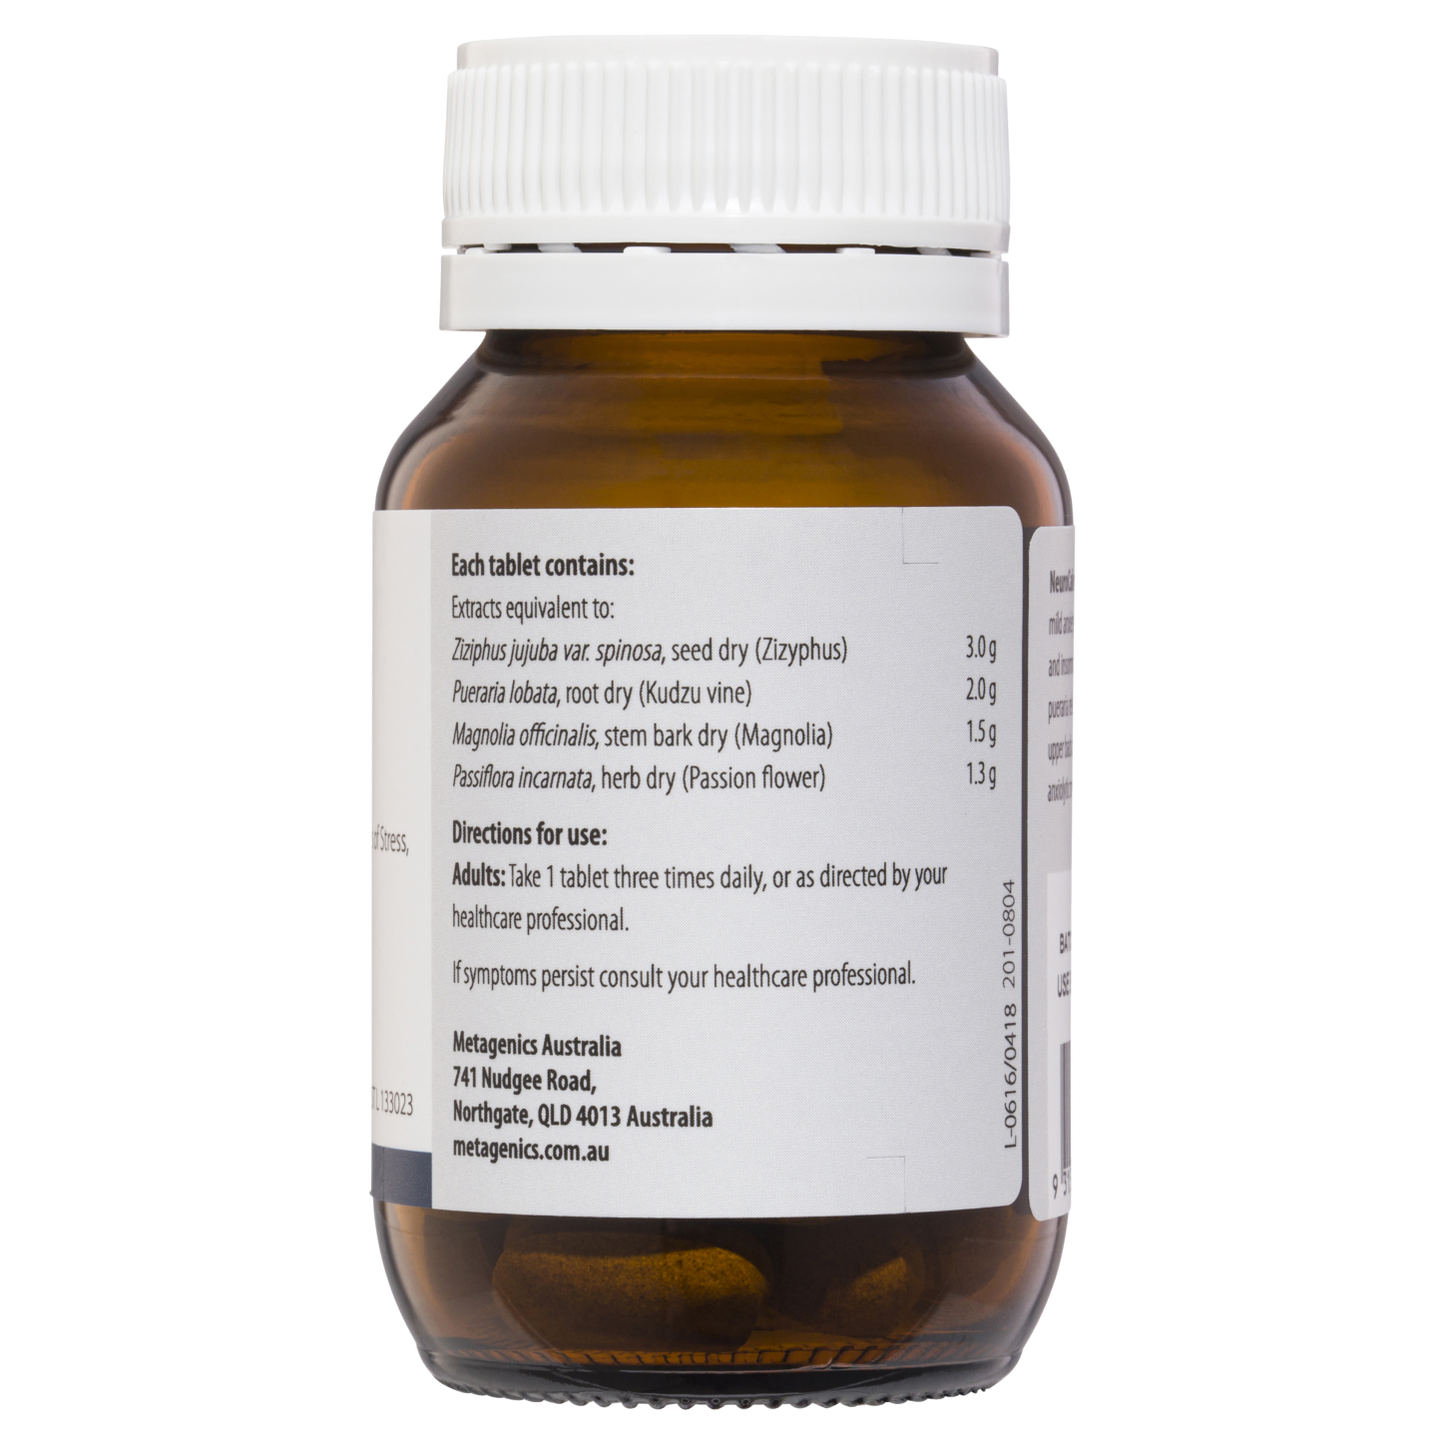 NeuroCalm® 60 Tablets- Metagenics